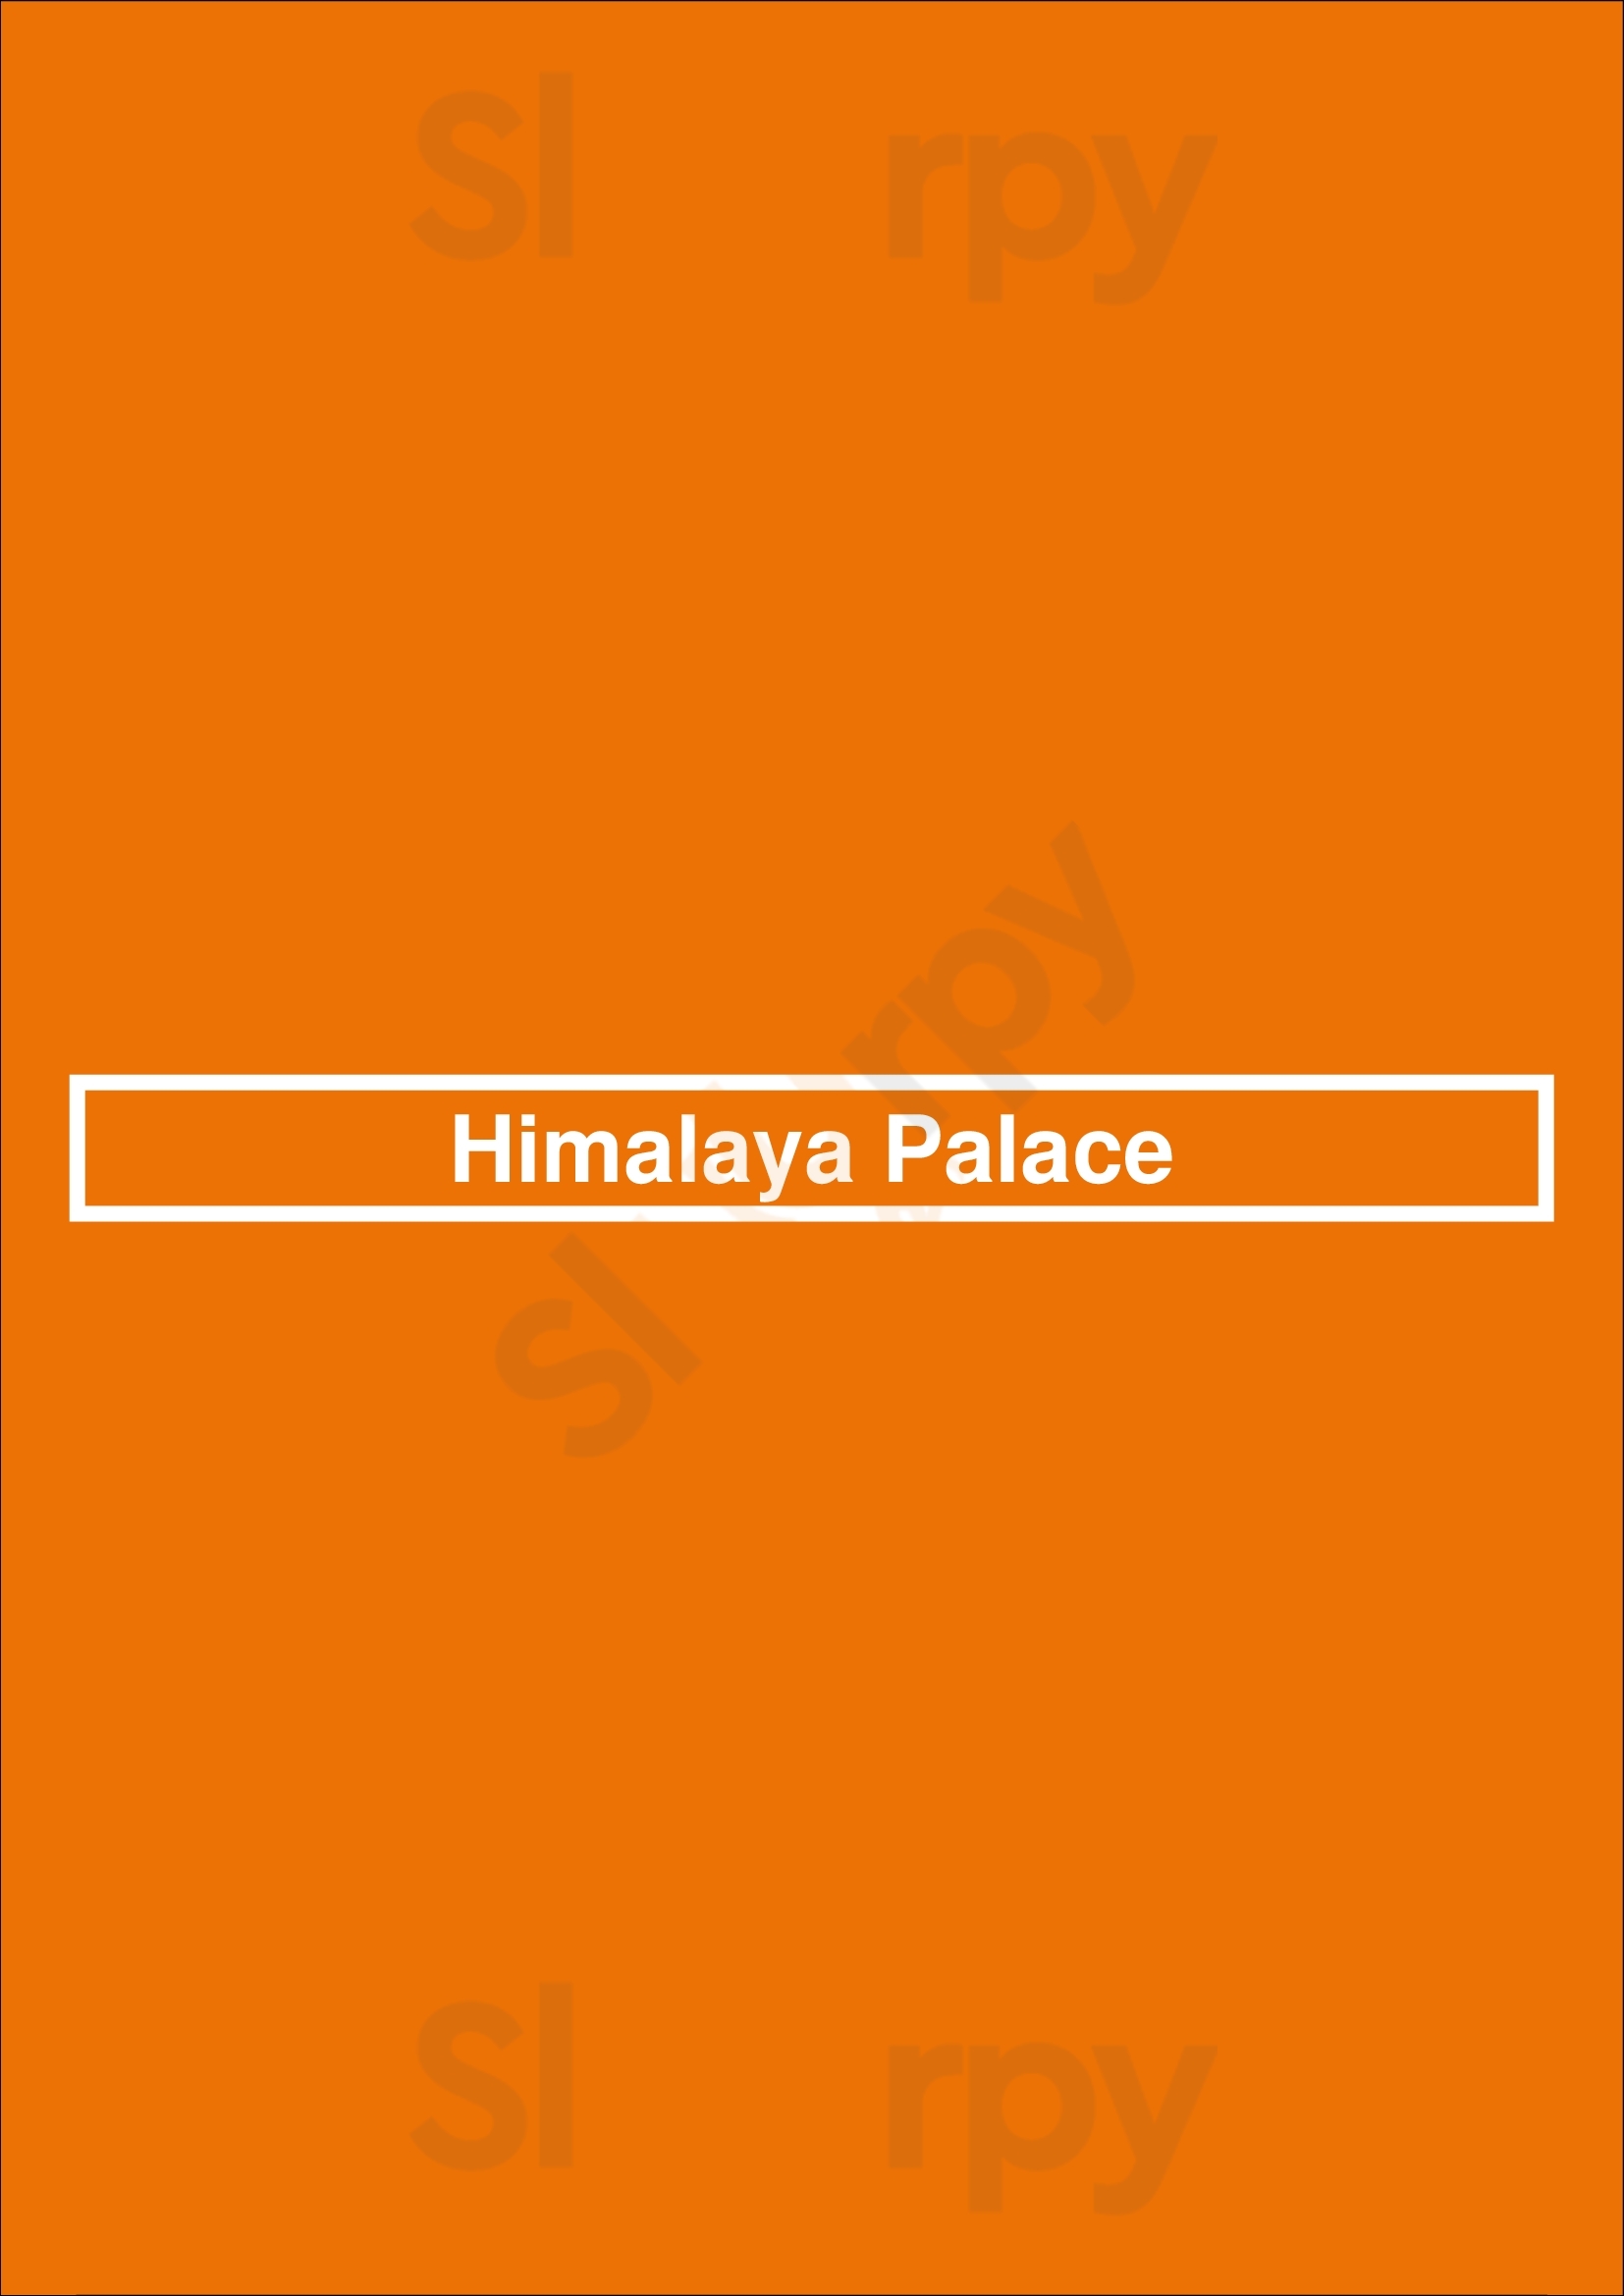 Himalaya Palace Aalsmeer Menu - 1